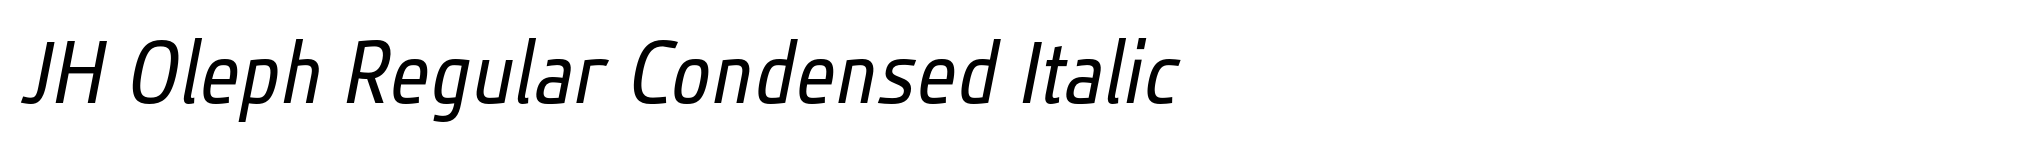 JH Oleph Regular Condensed Italic image